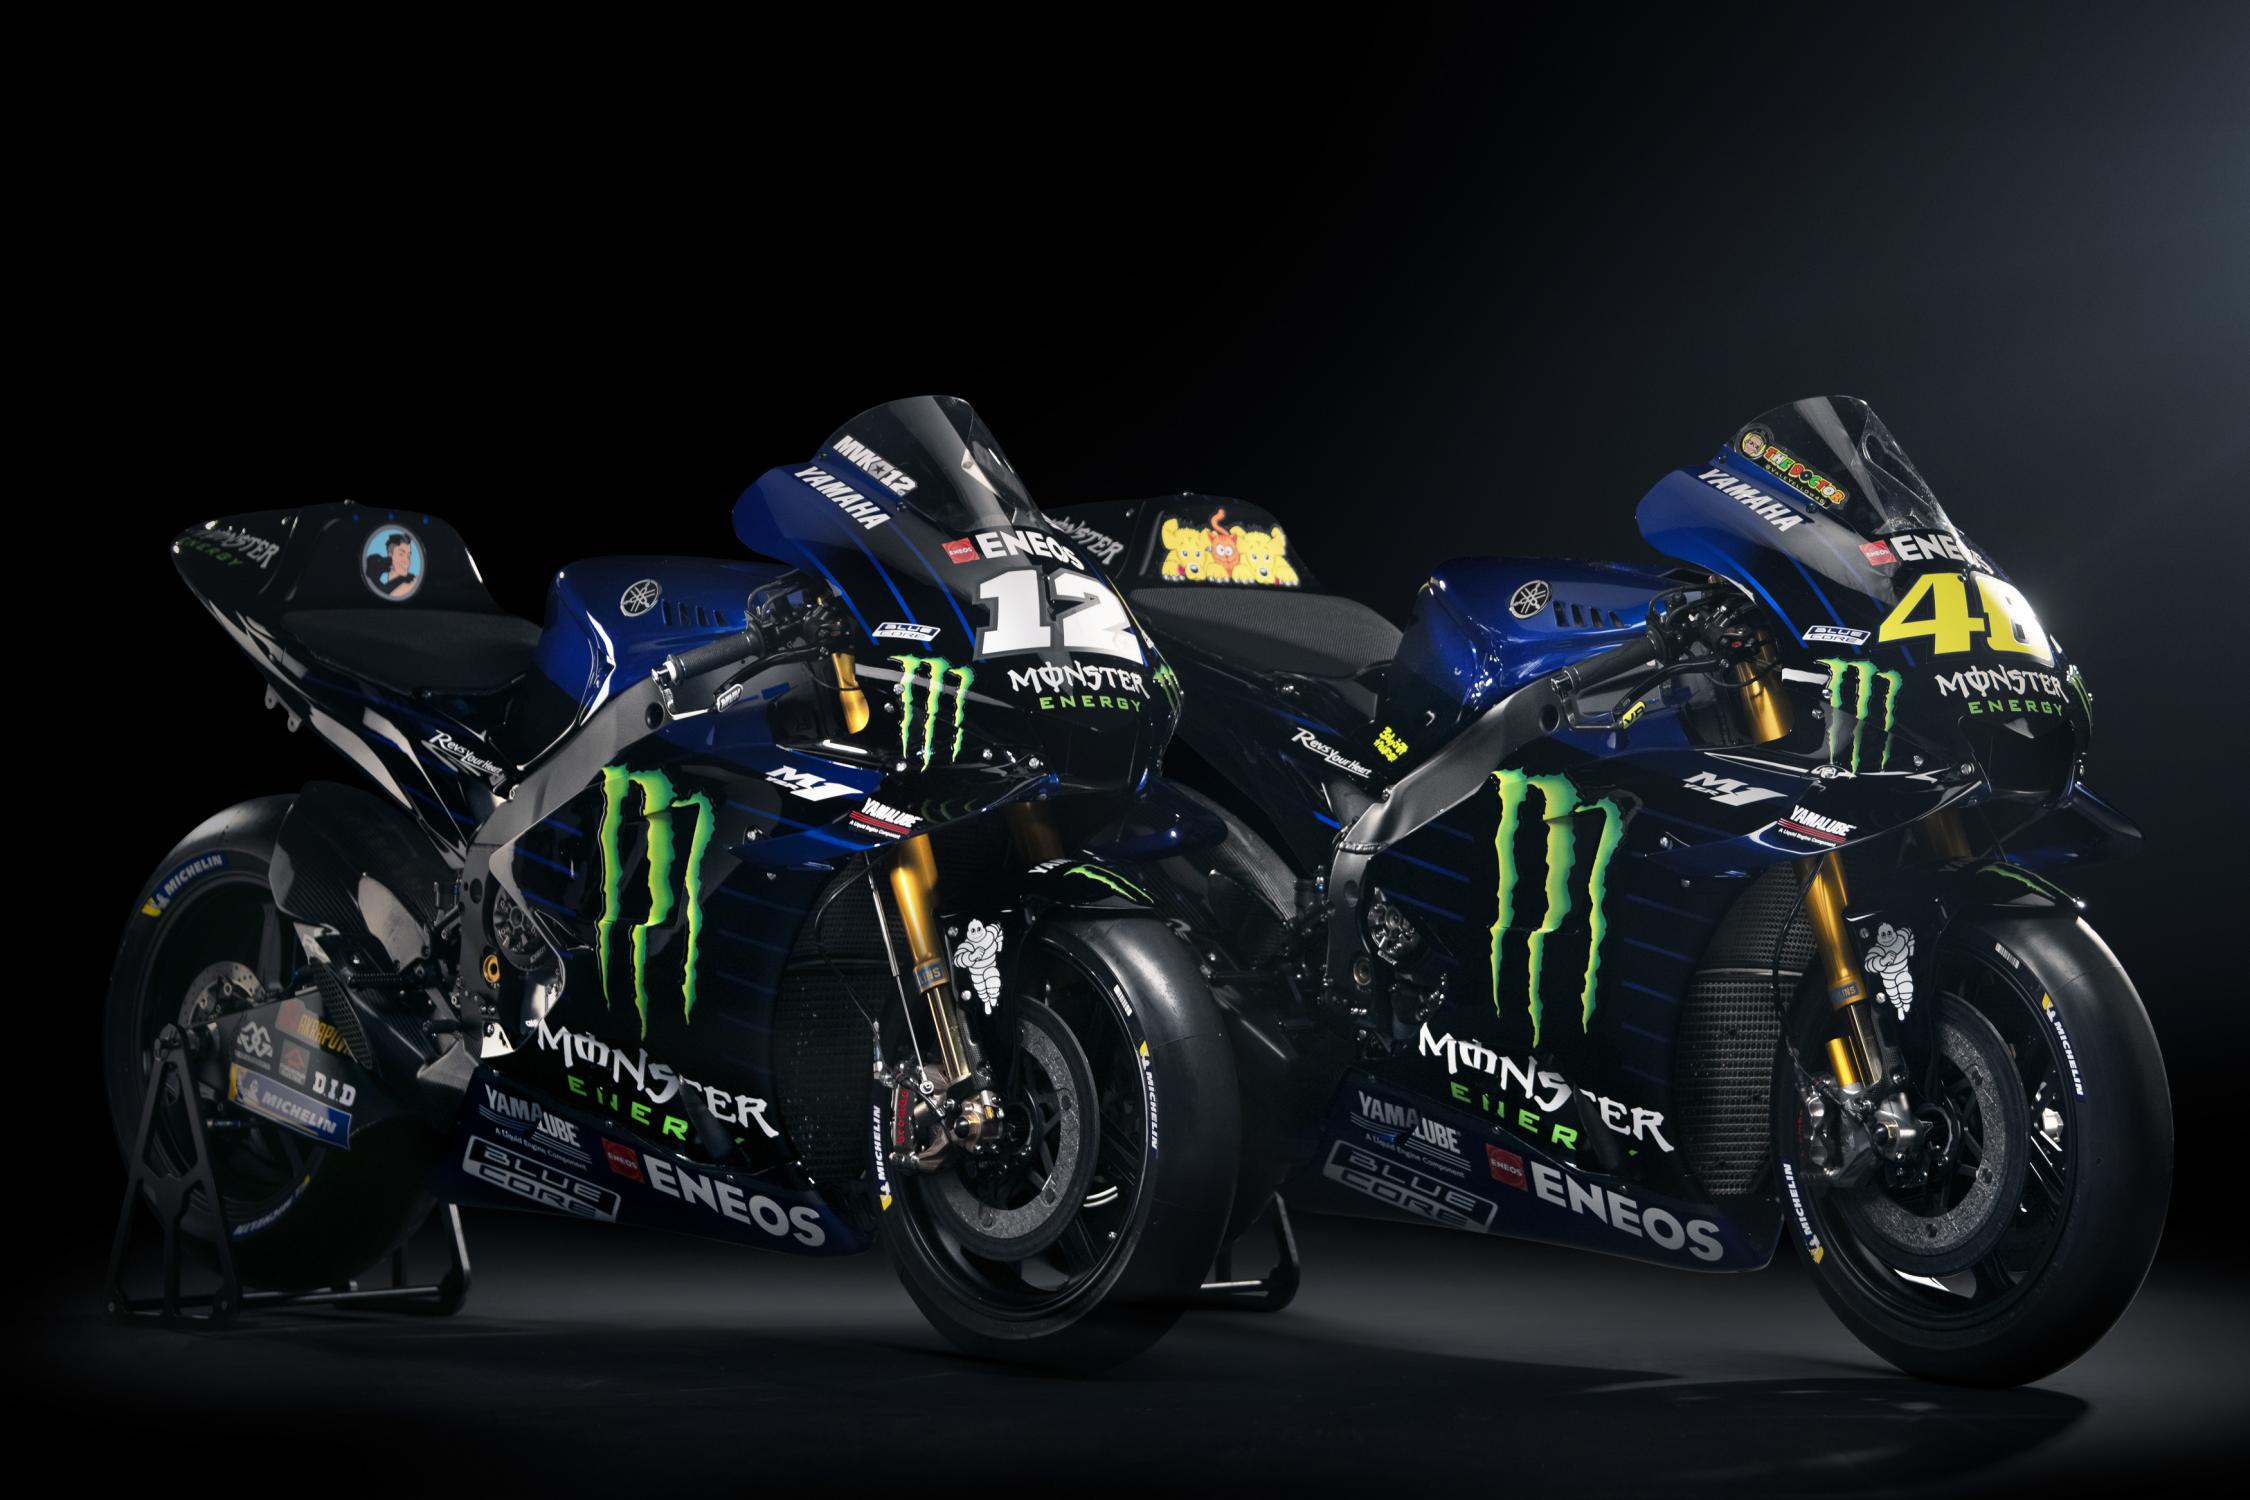  MotoGP  2019  Monster Energy Yamaha  MotoGP  2019  Yamaha  YZR 